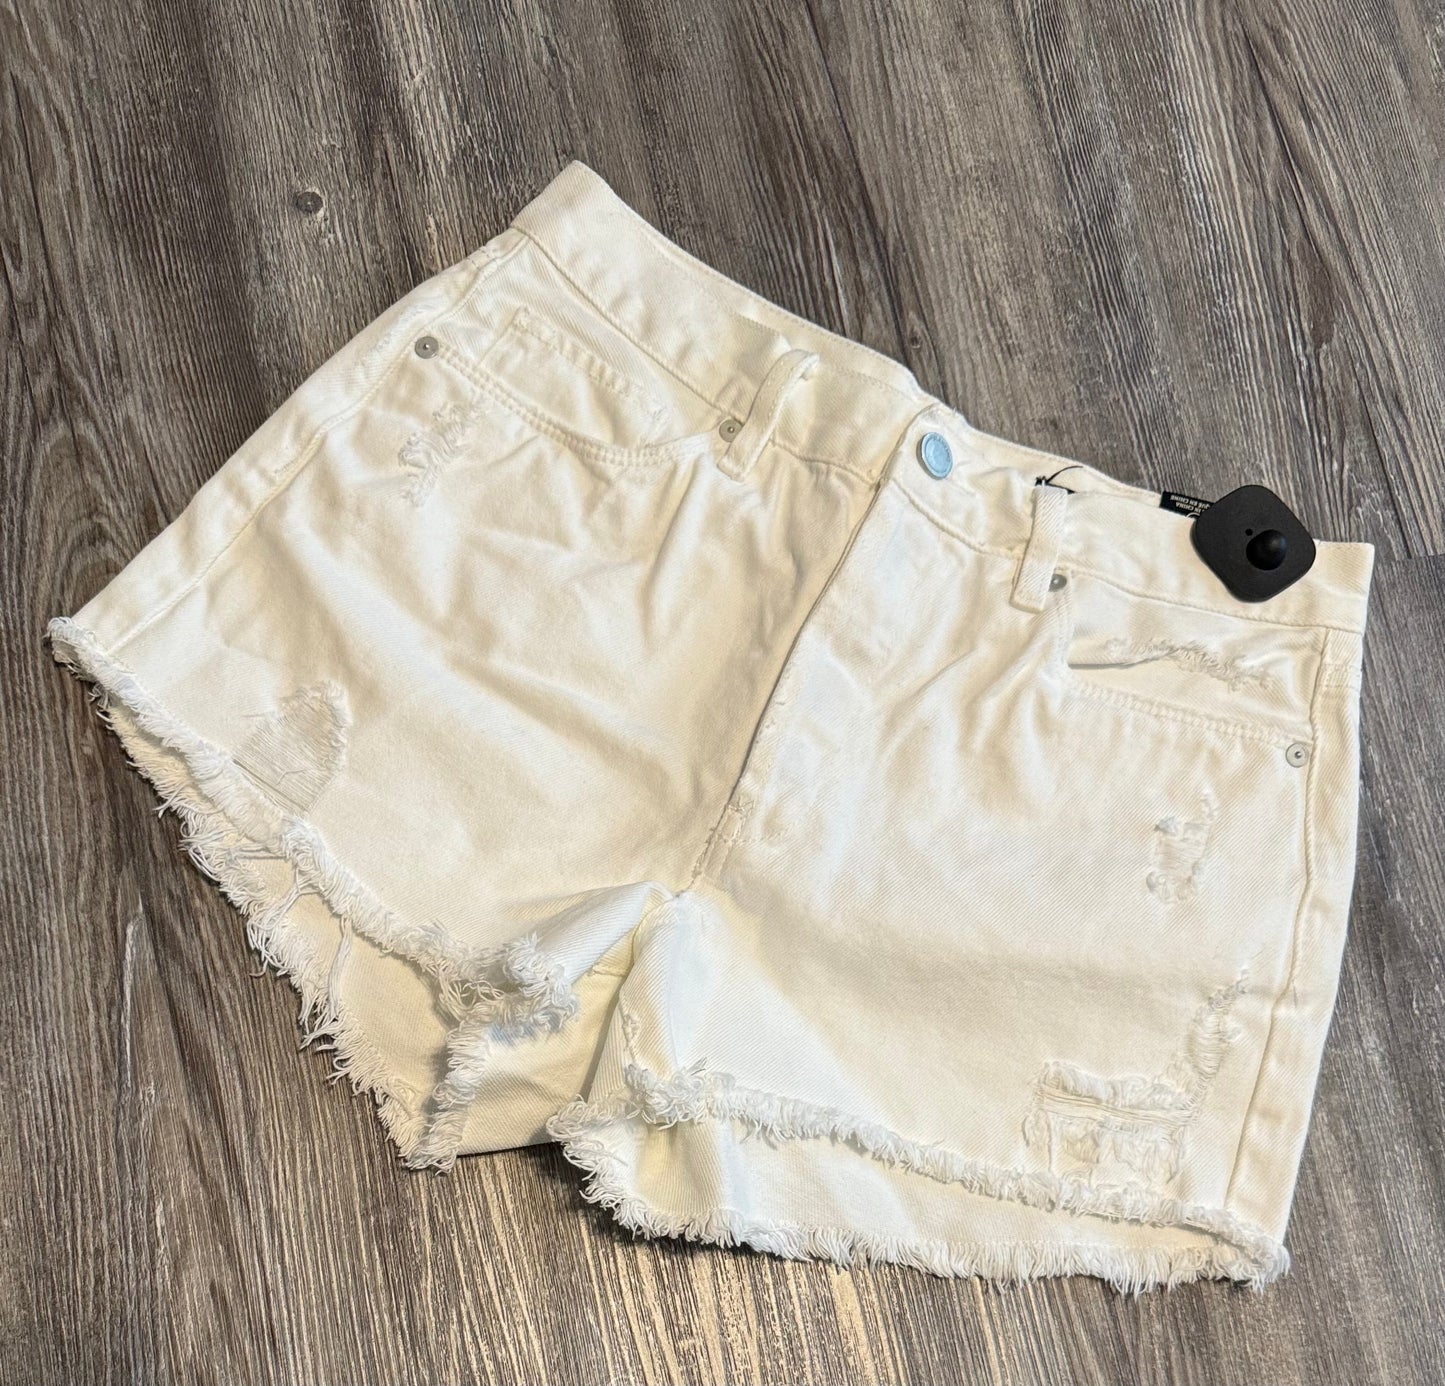 Shorts By Blanknyc  Size: 8